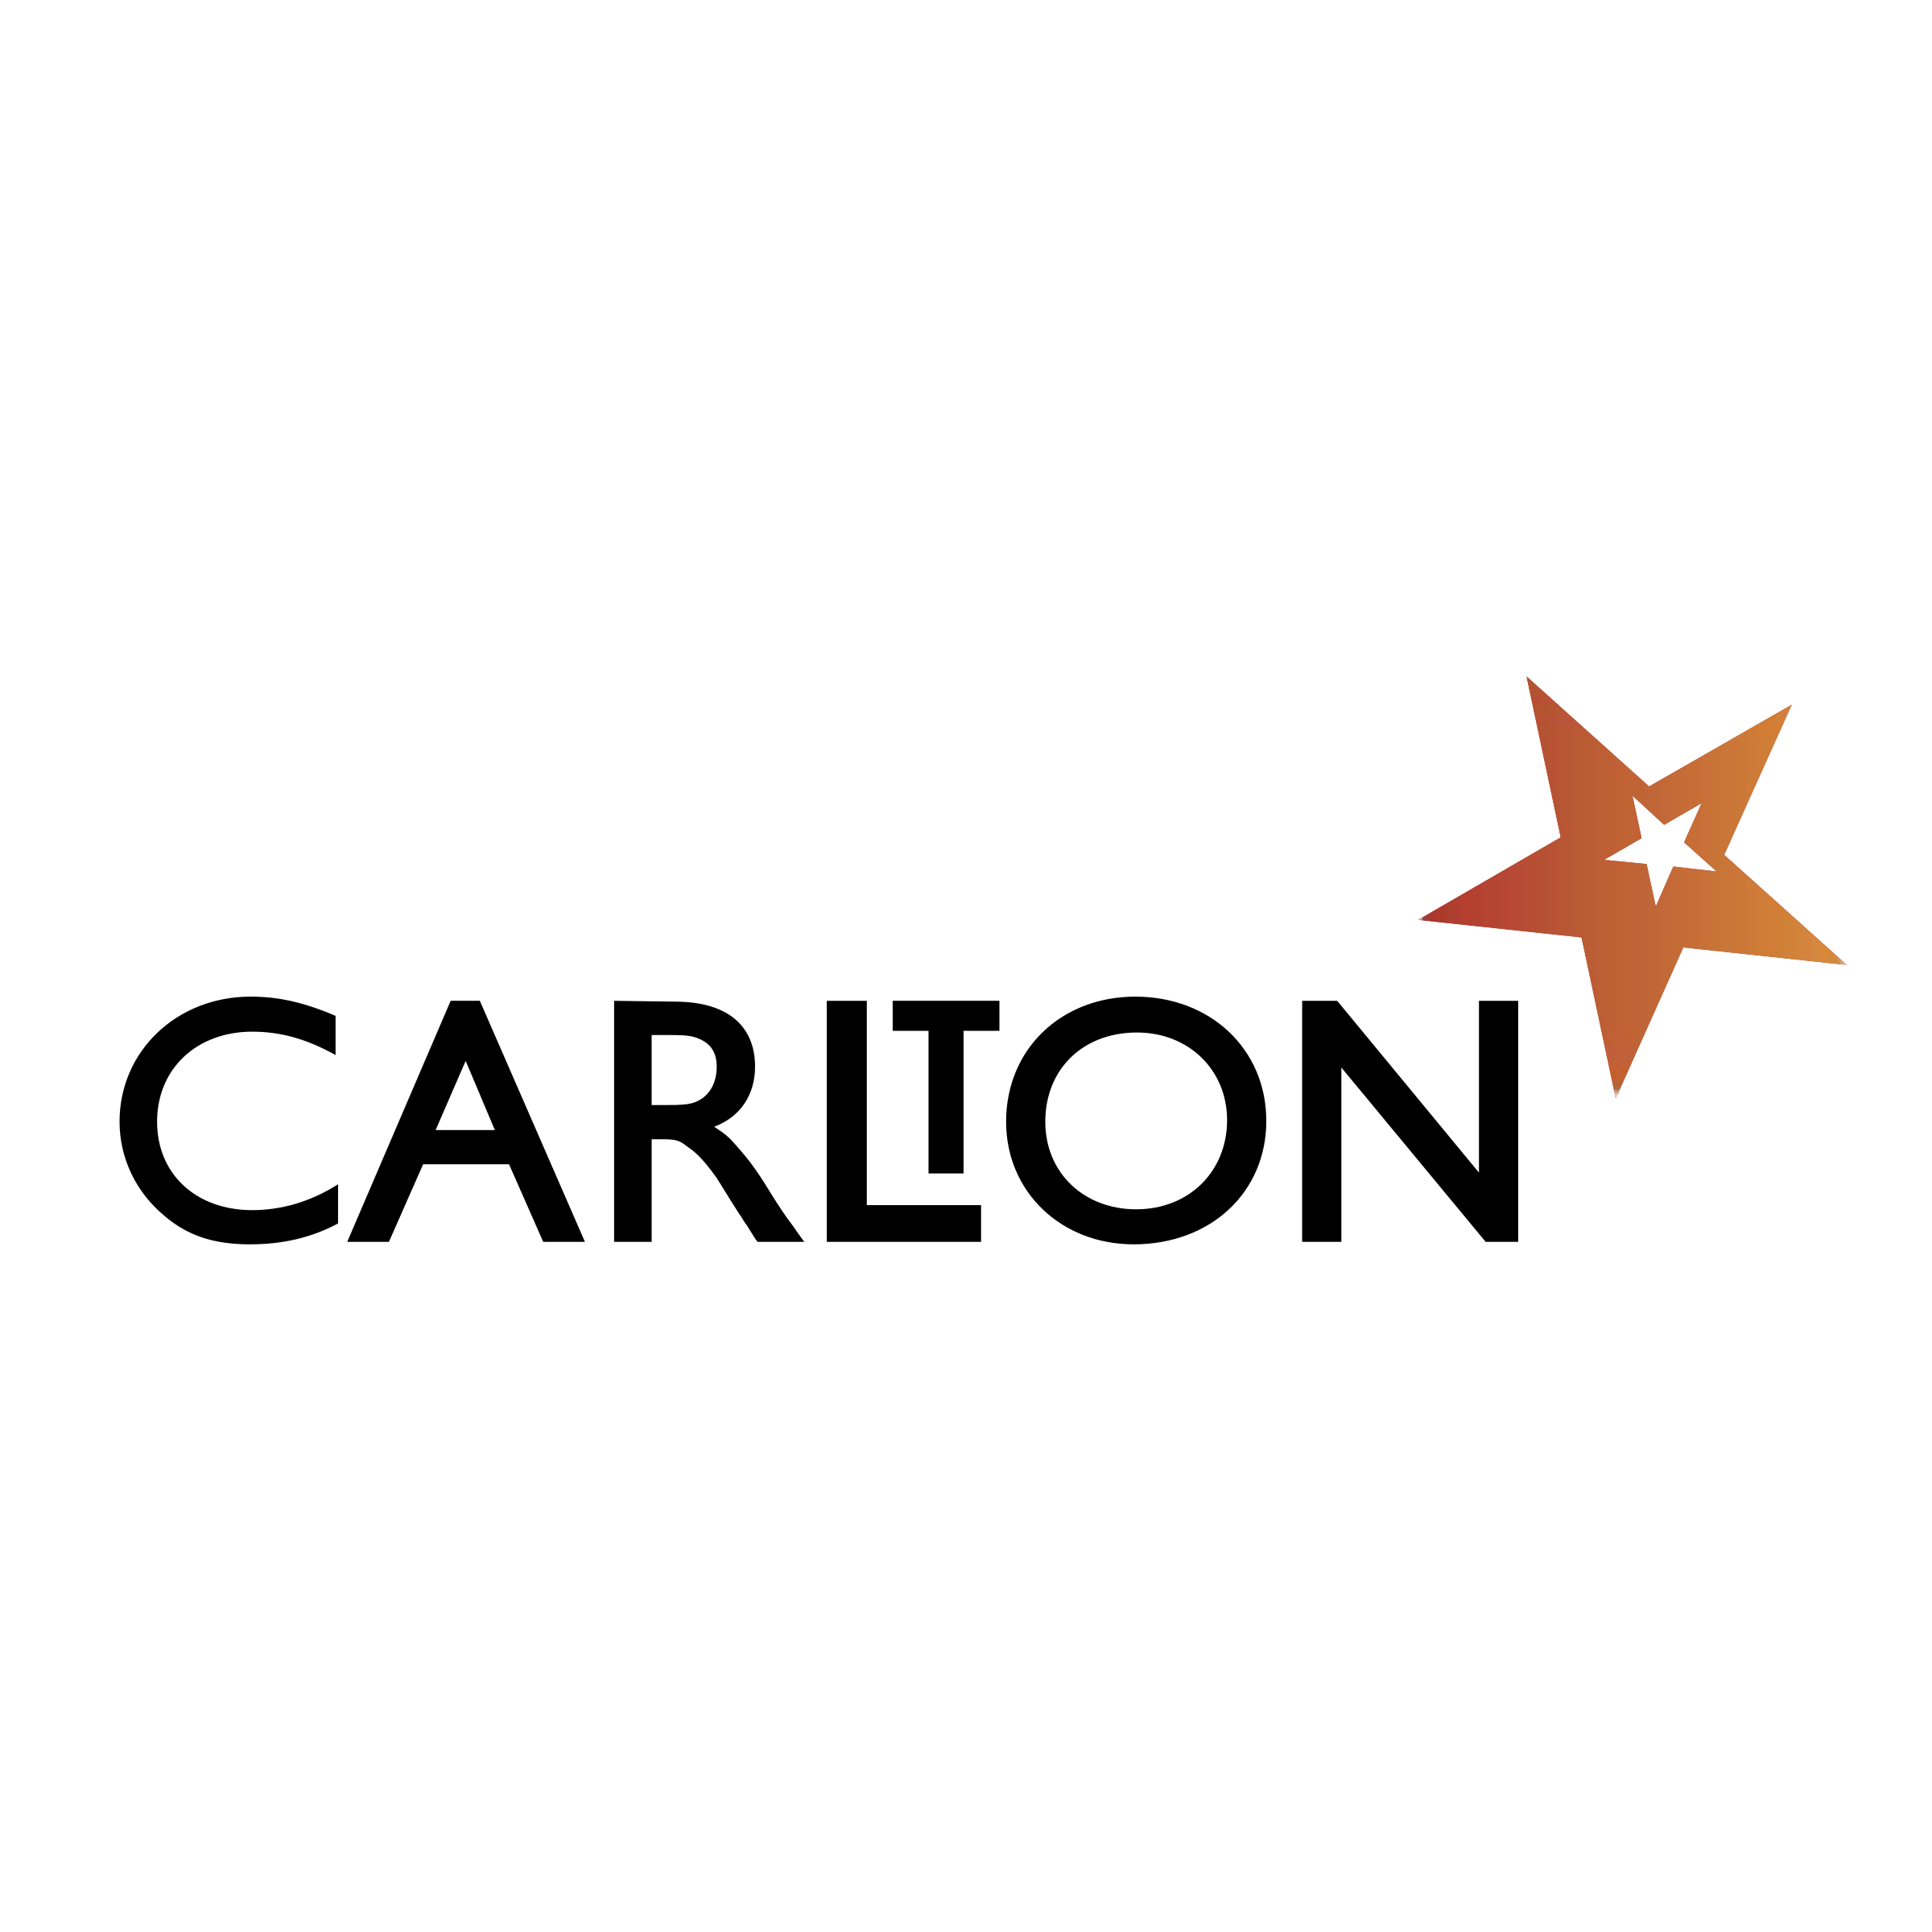 Carlton Logo - Carlton Logo PNG Transparent & SVG Vector - Freebie Supply